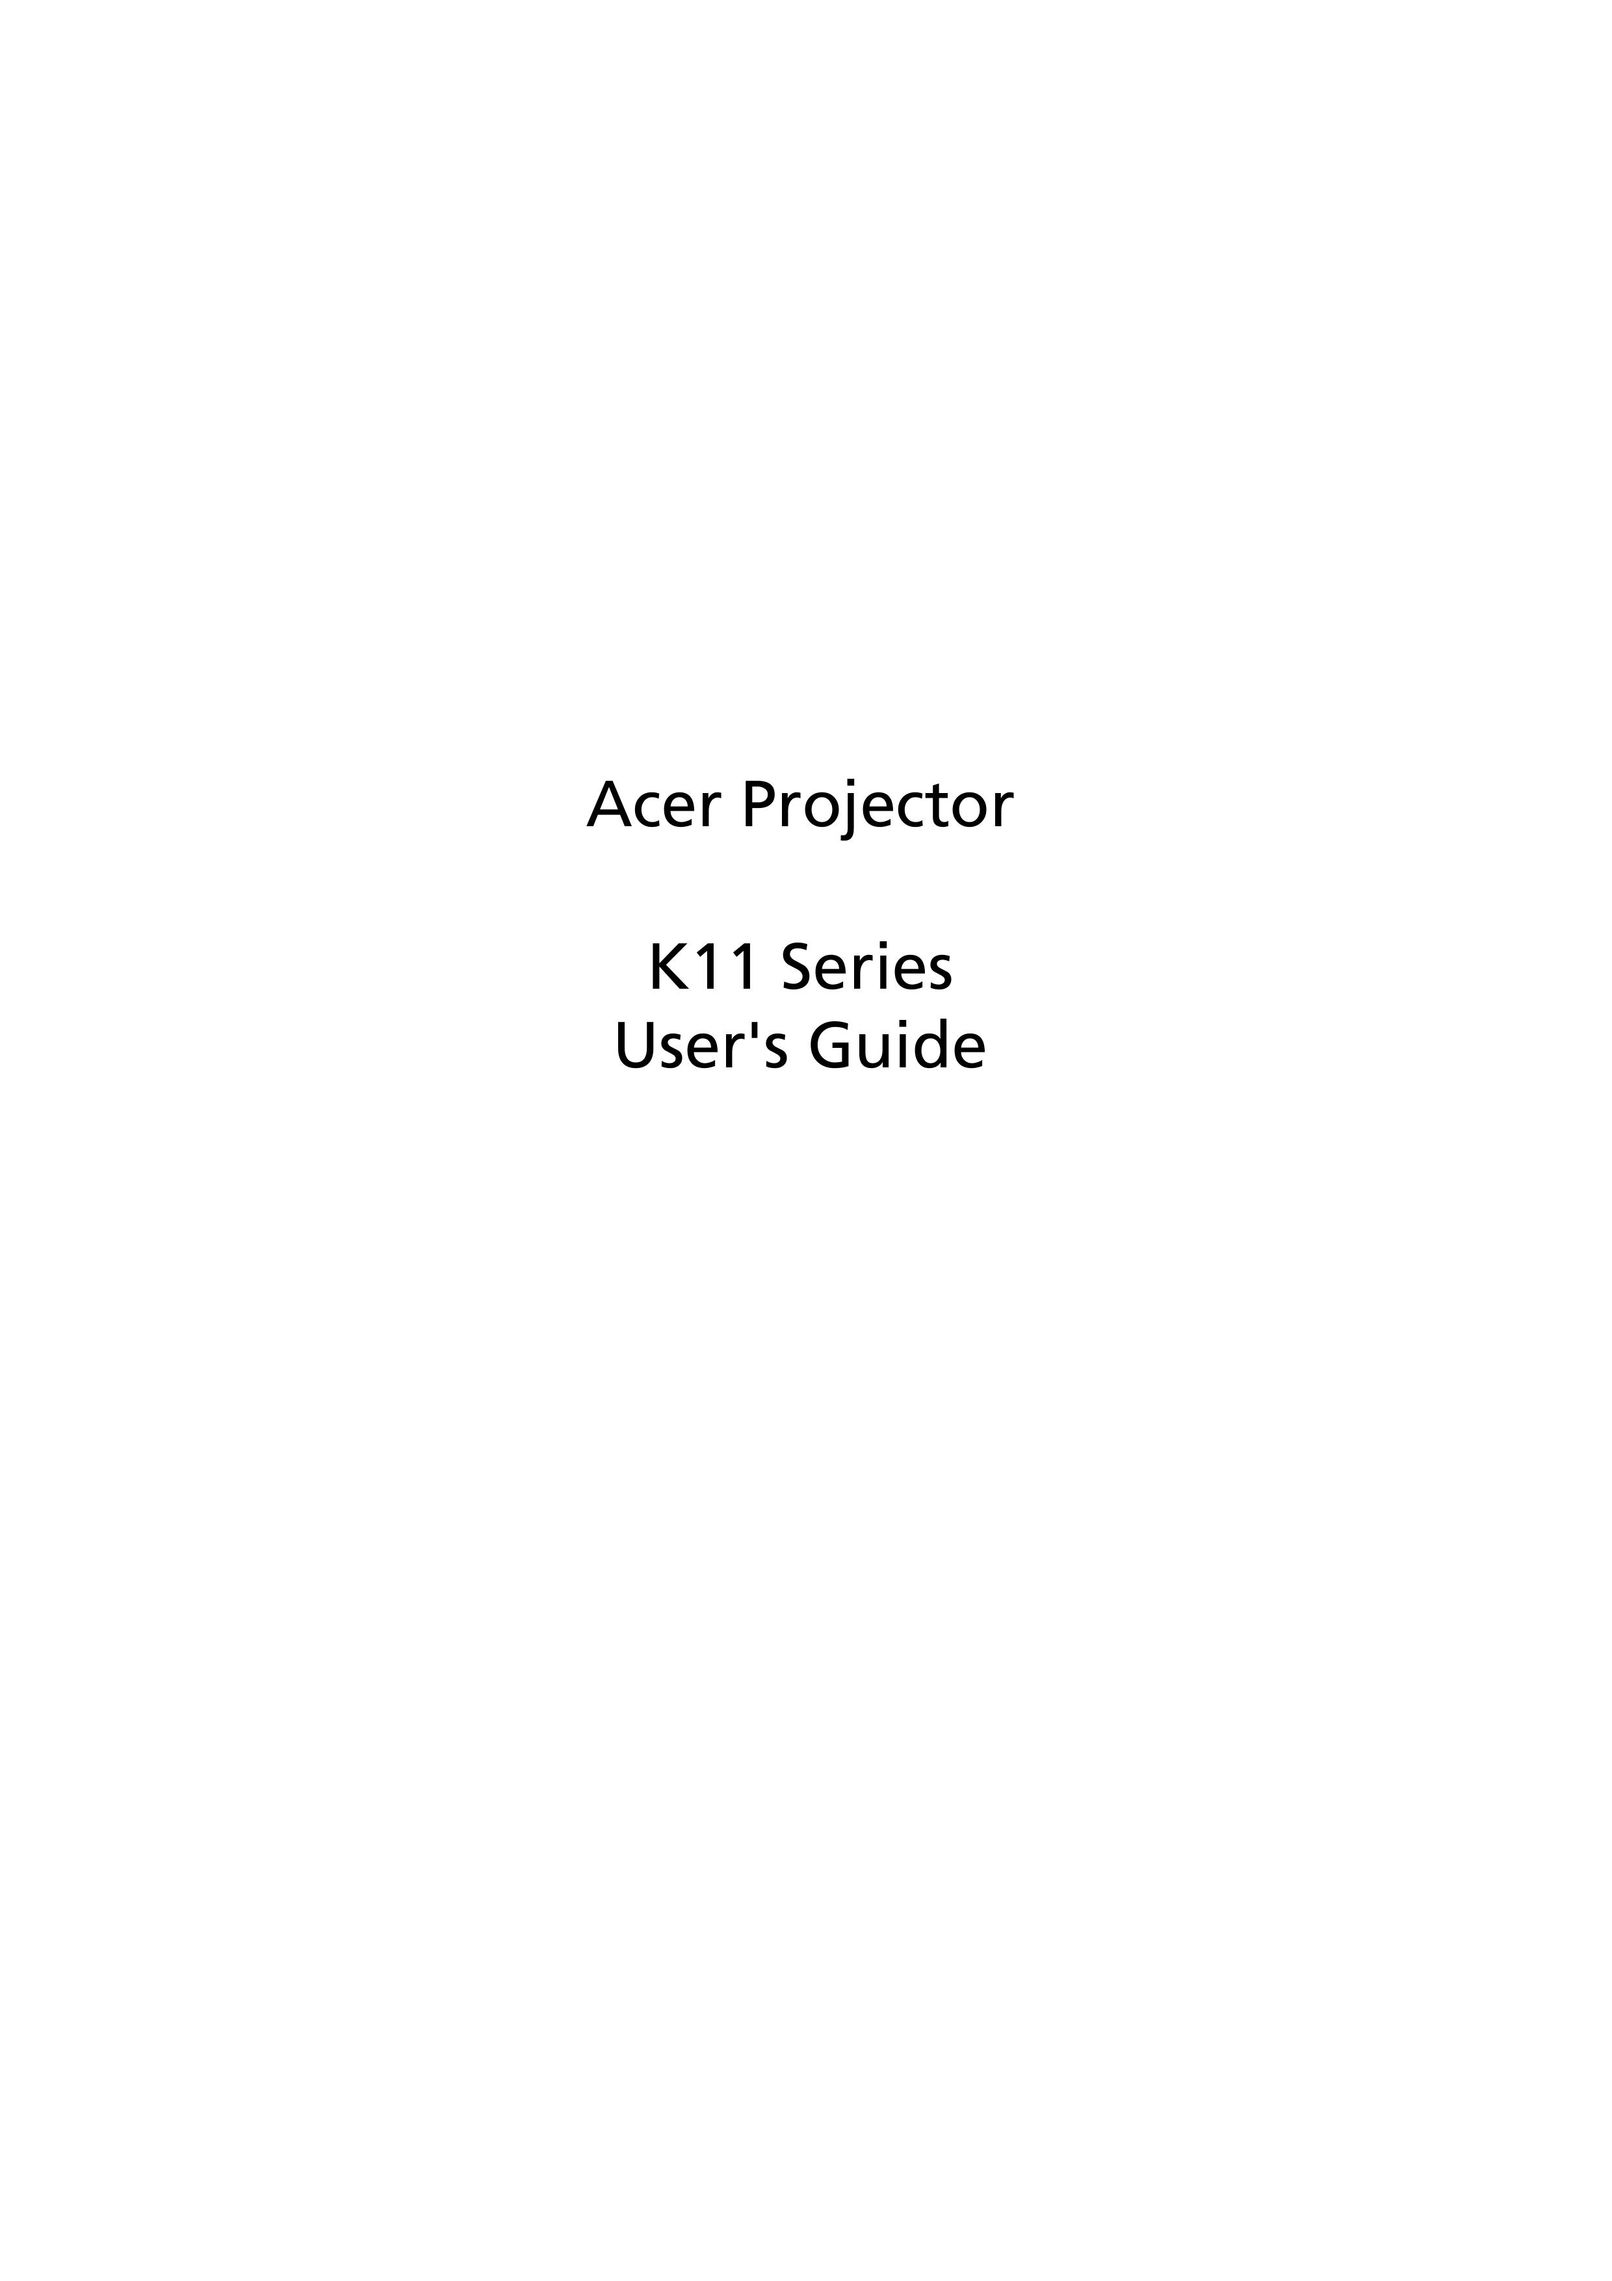 Acer K11 Projector User Manual